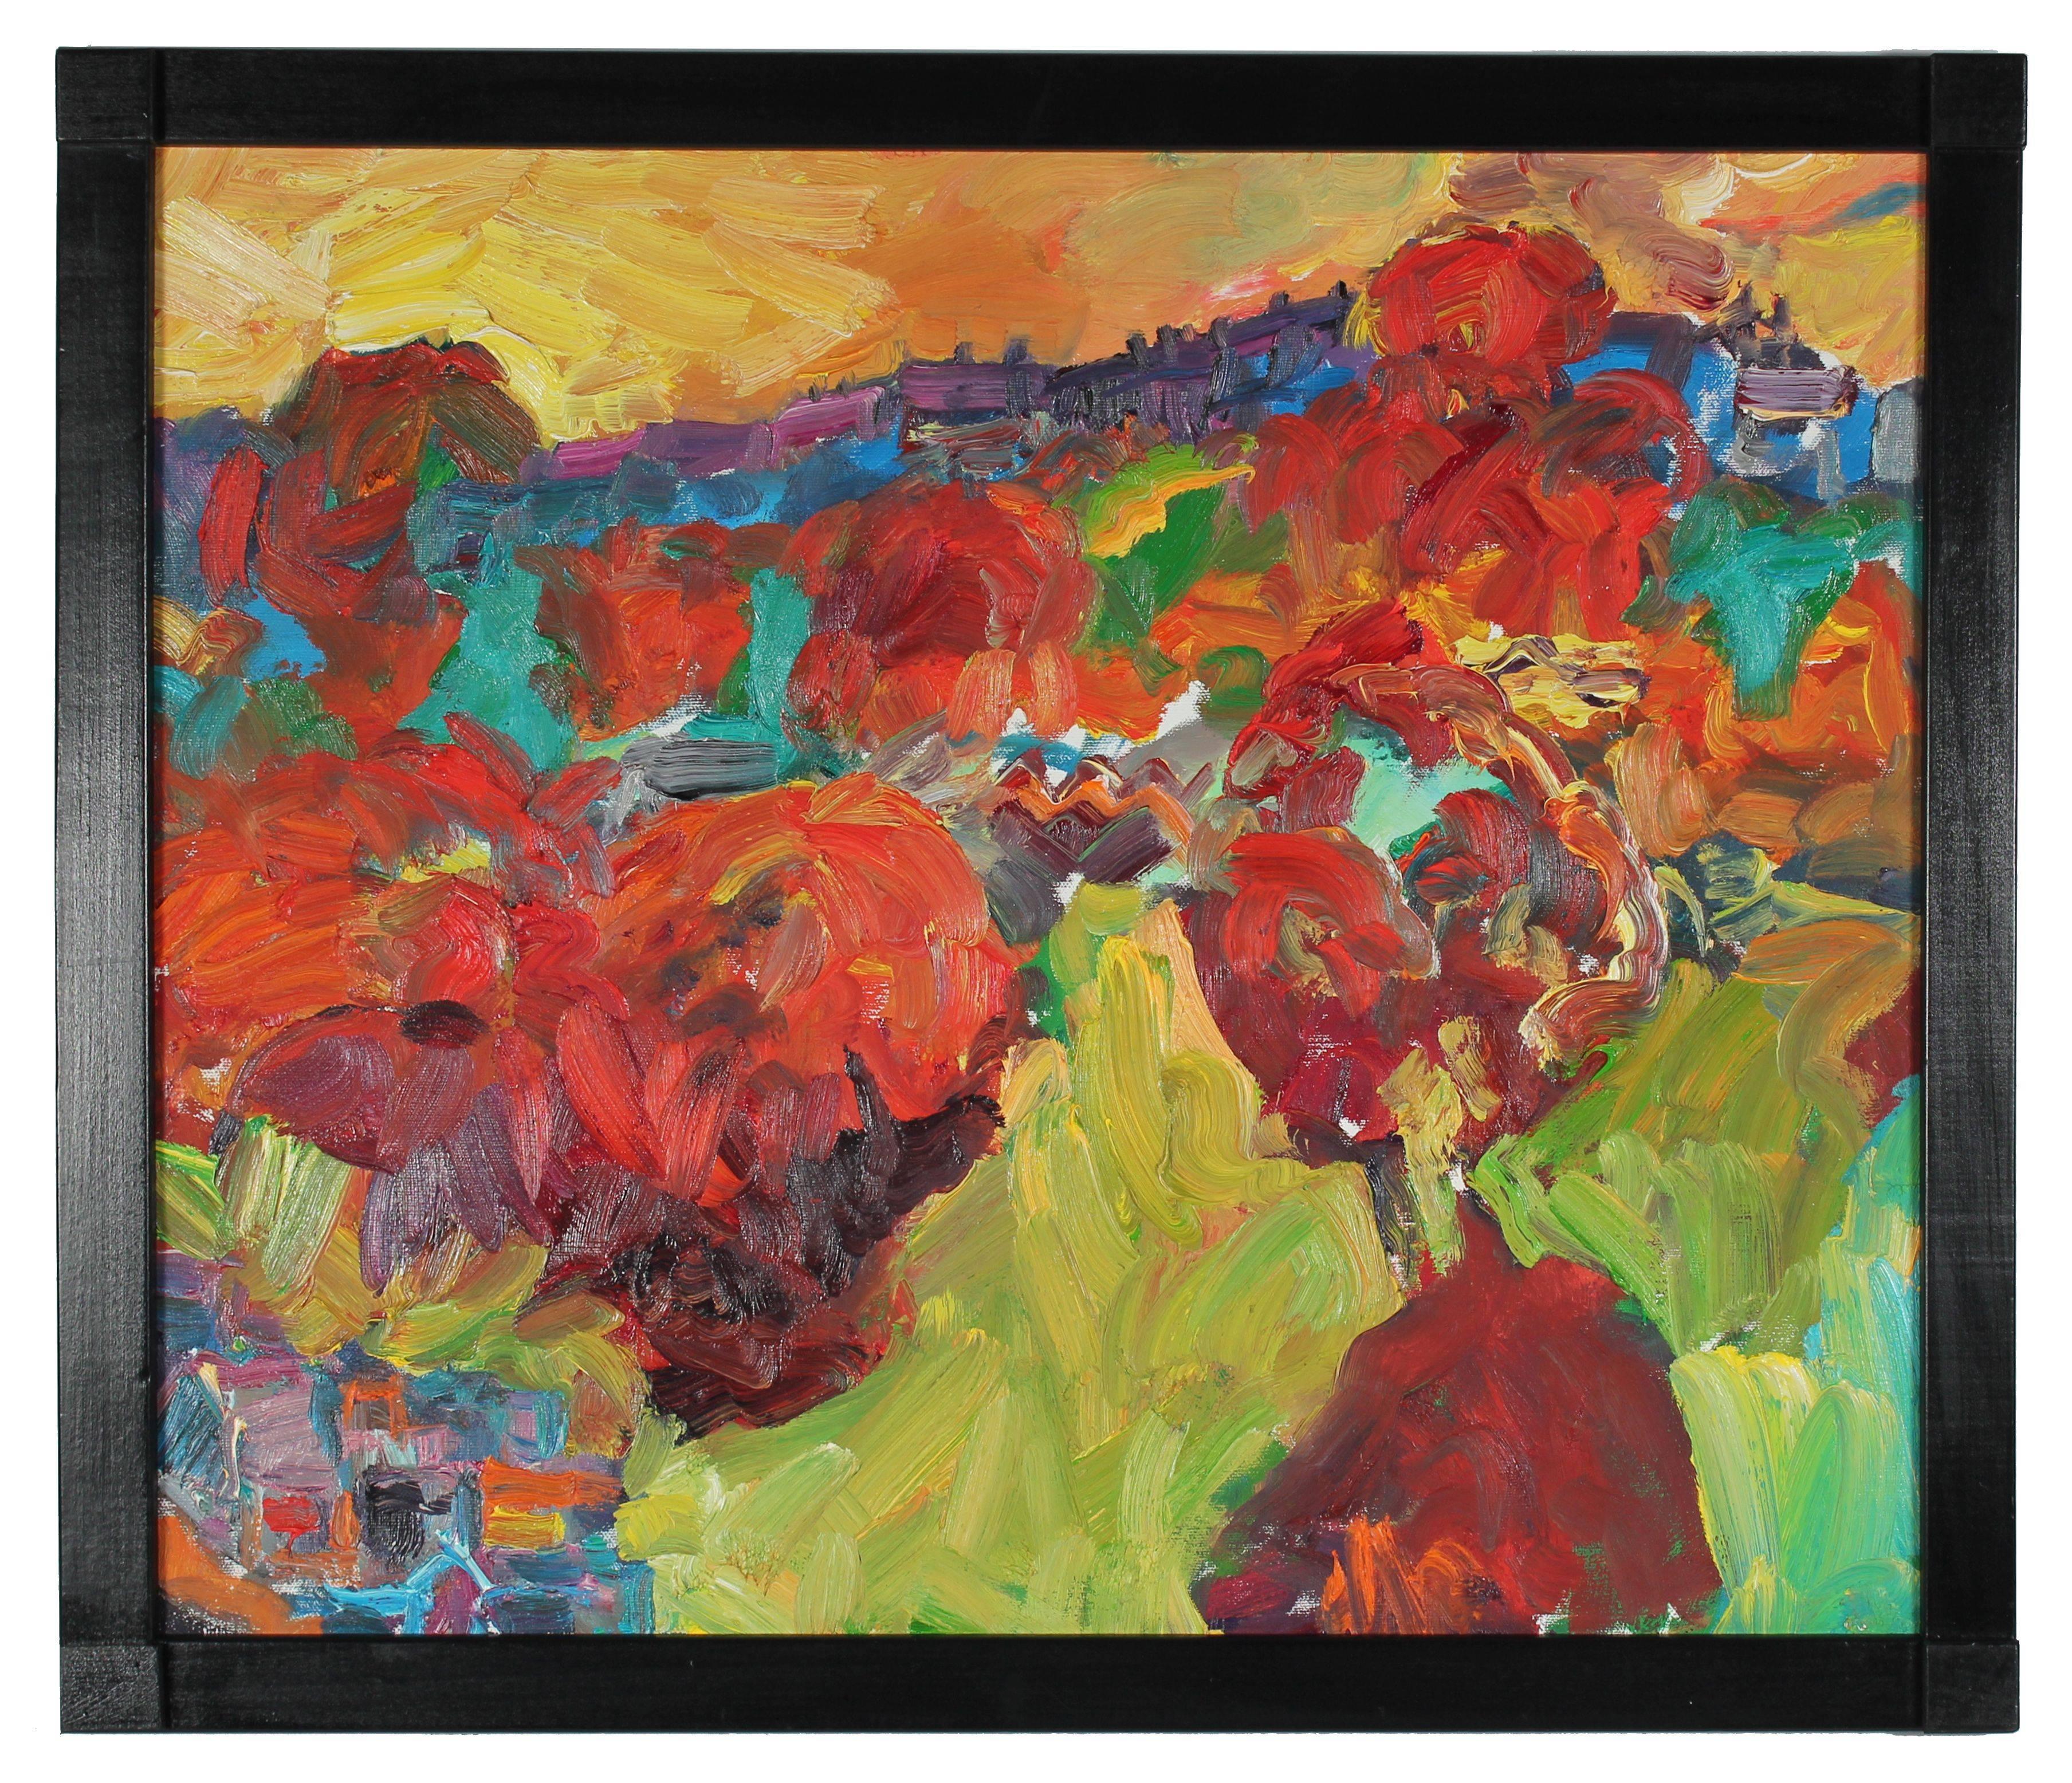 Jack Freeman Landscape Painting - "Red Trees" San Francisco Fauvist Landscape Oil, 2011